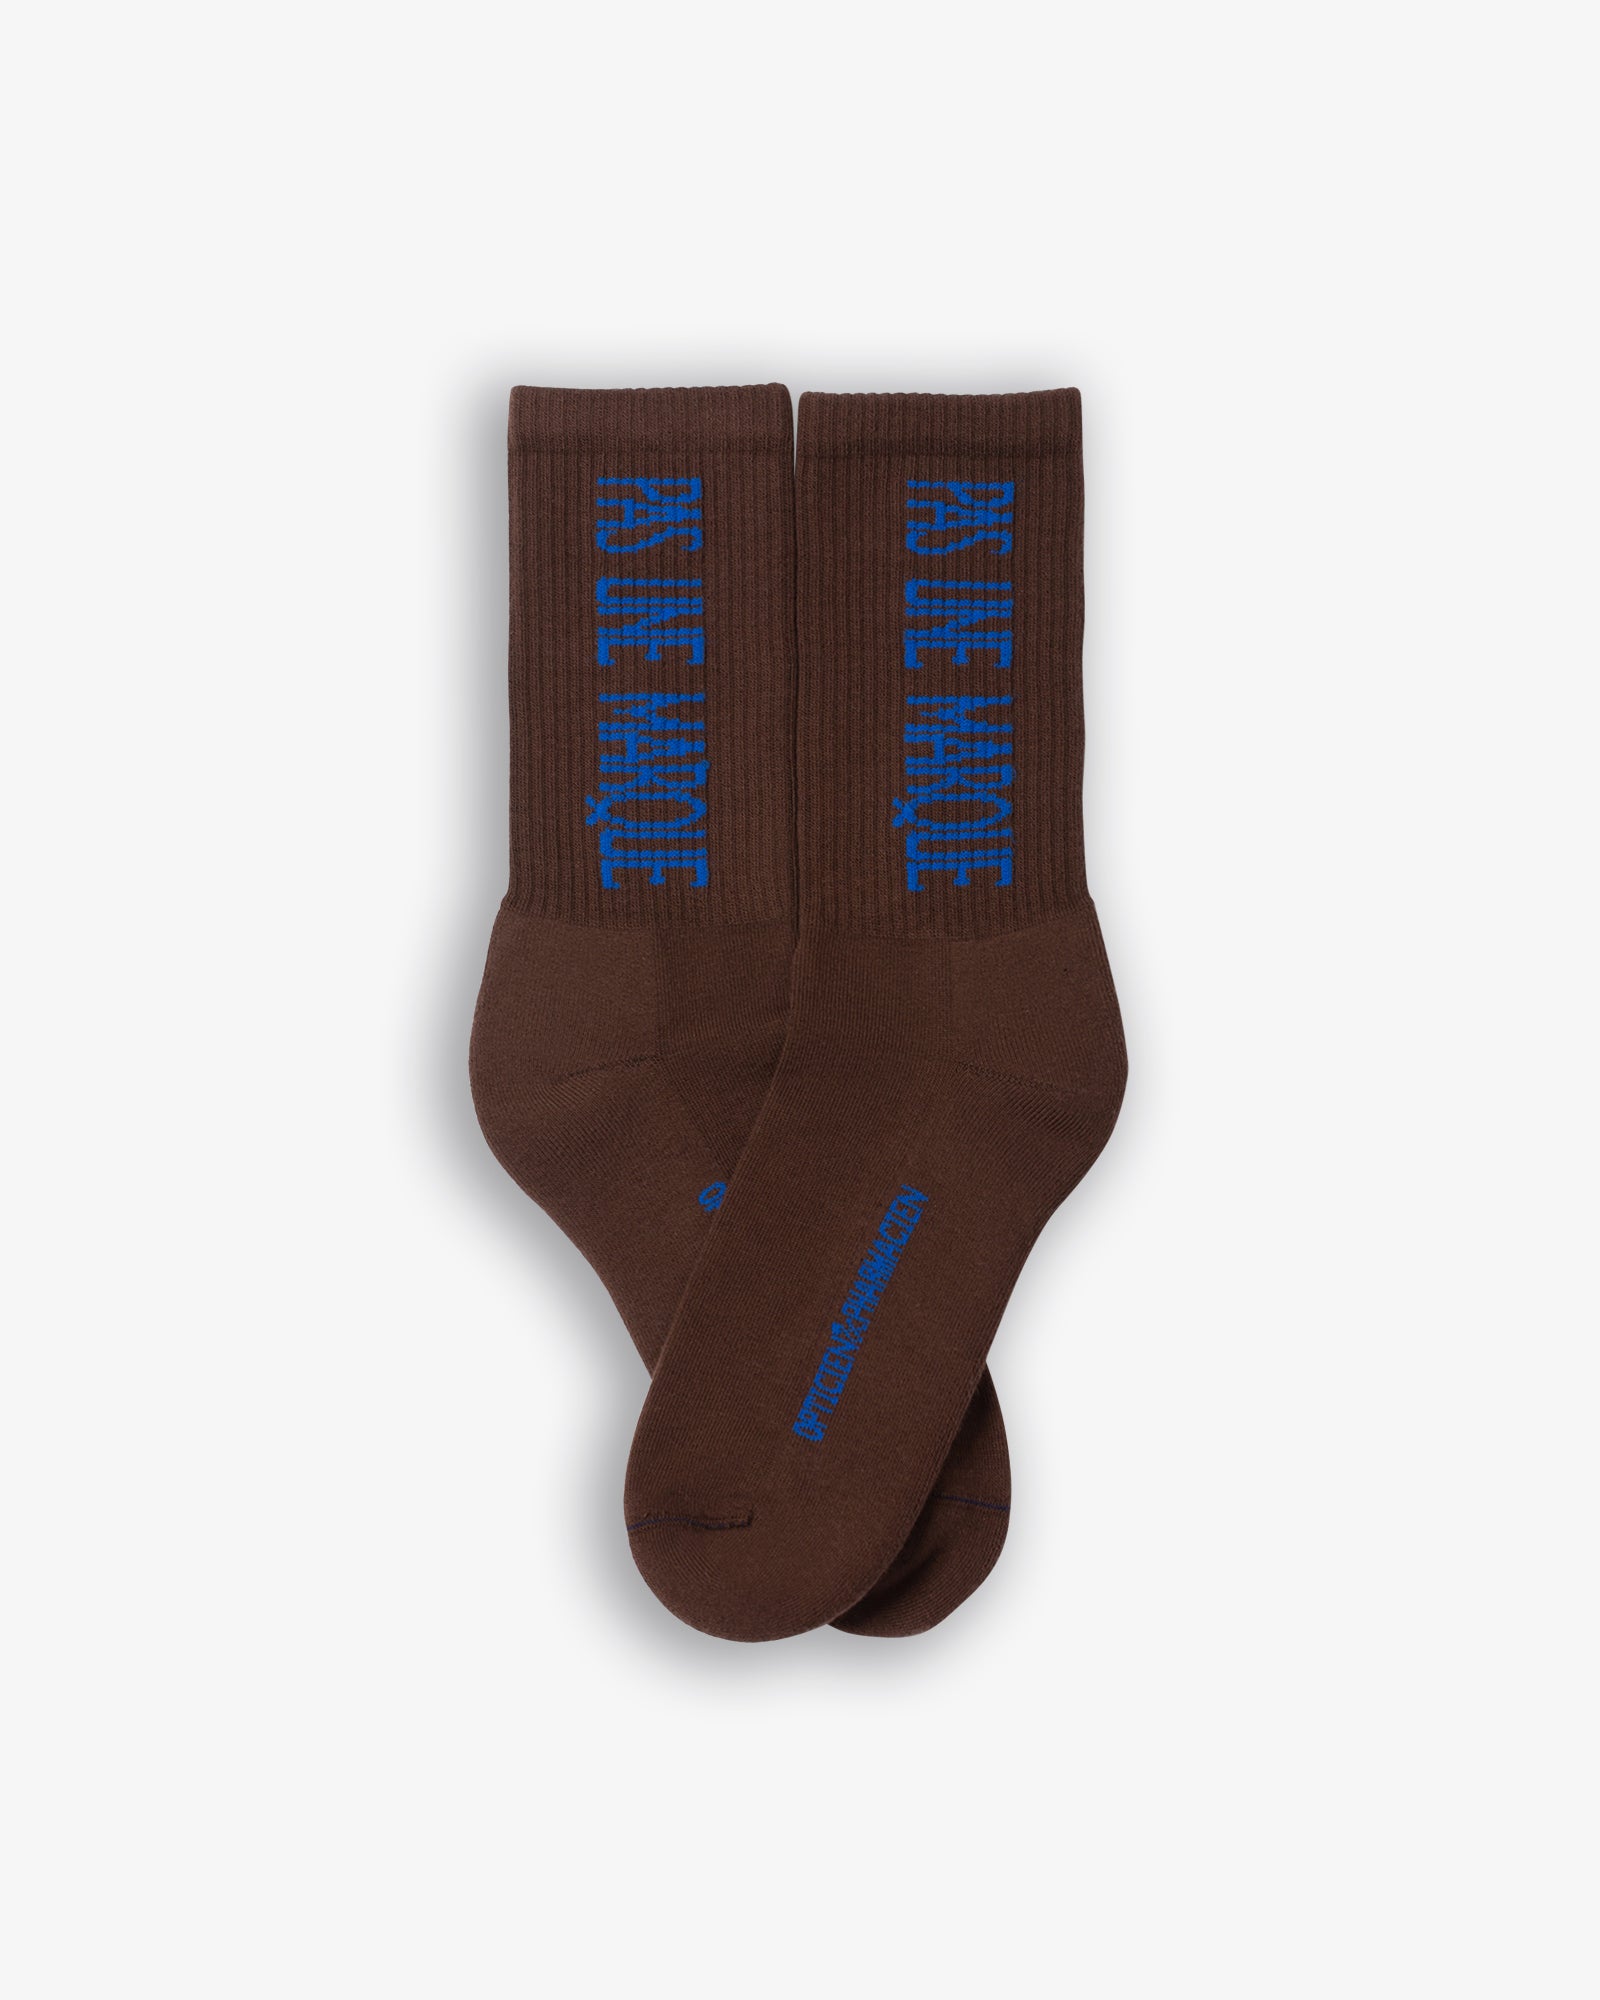 O&P Socks (Brown / Bue)